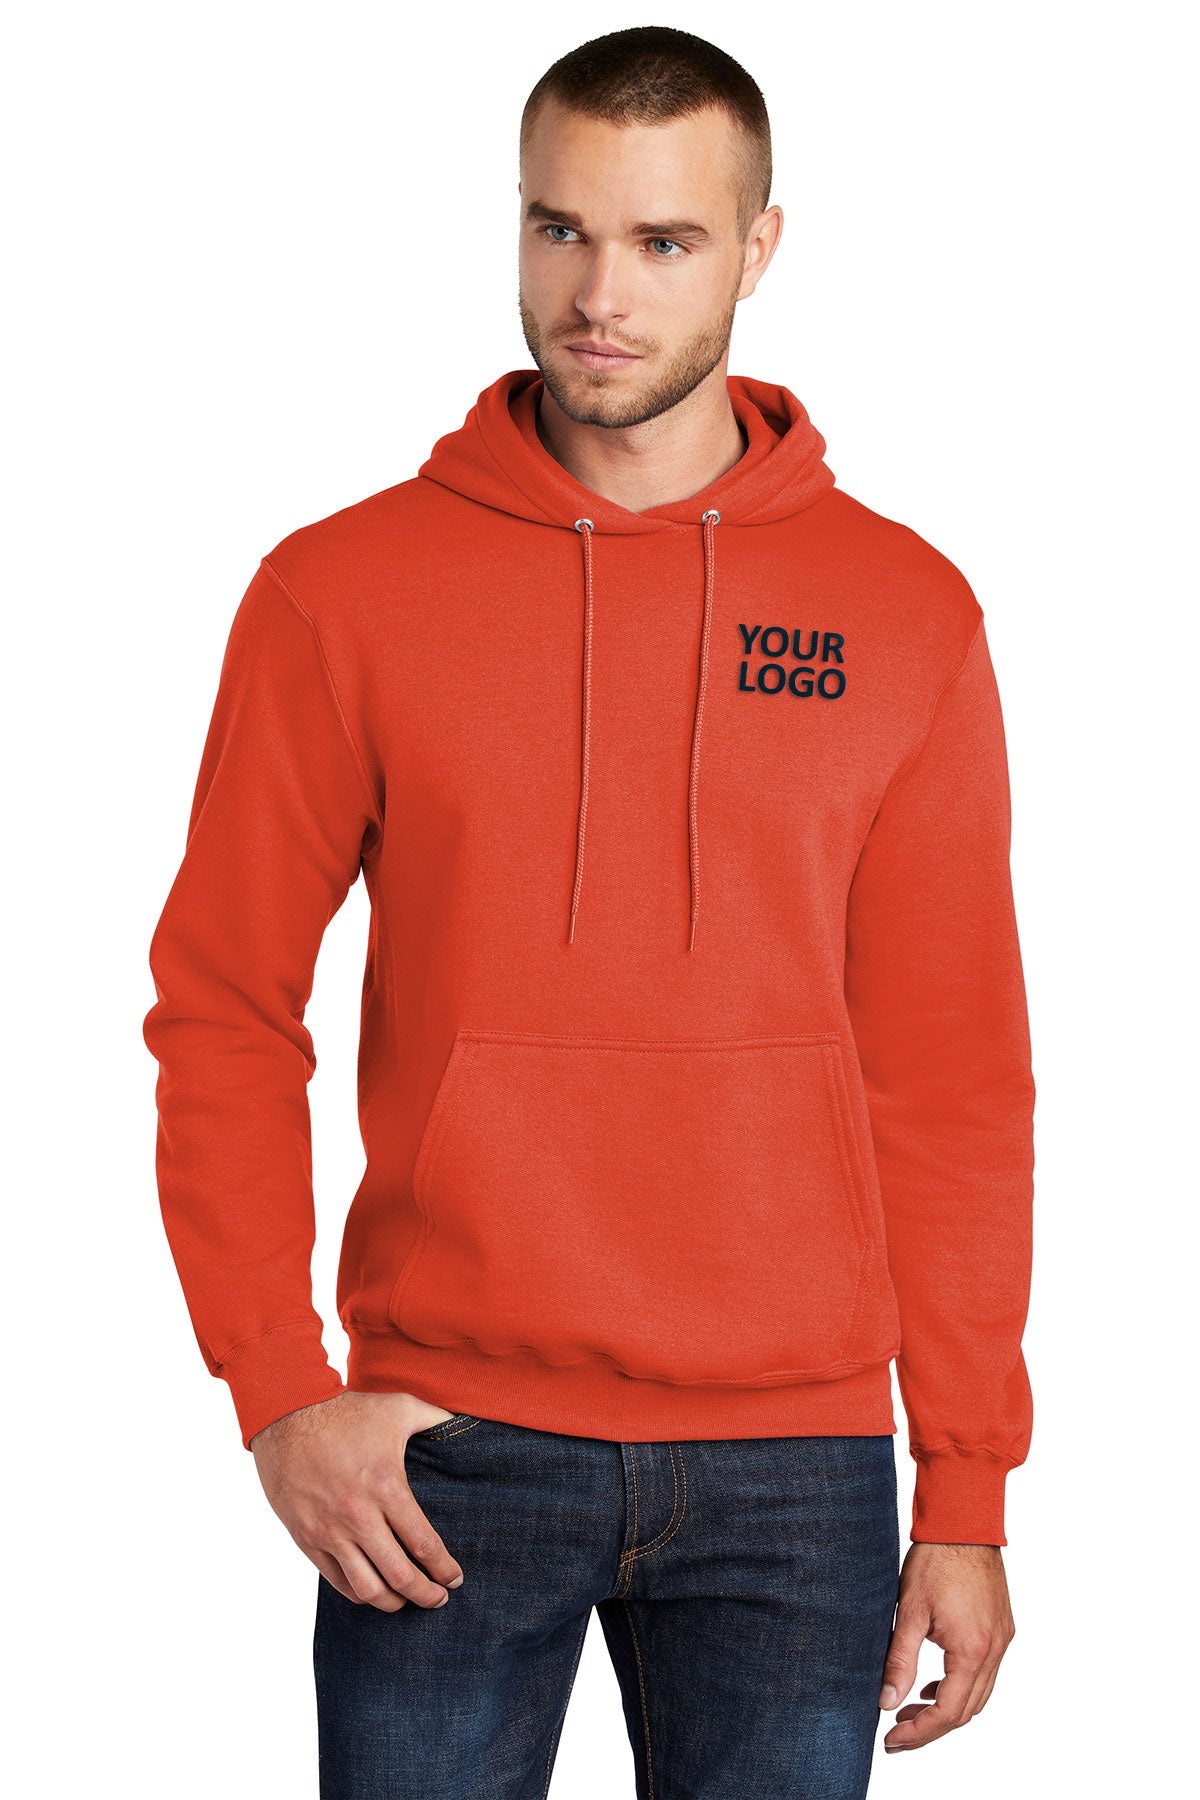 port & company orange pc78h sweatshirts with company logo